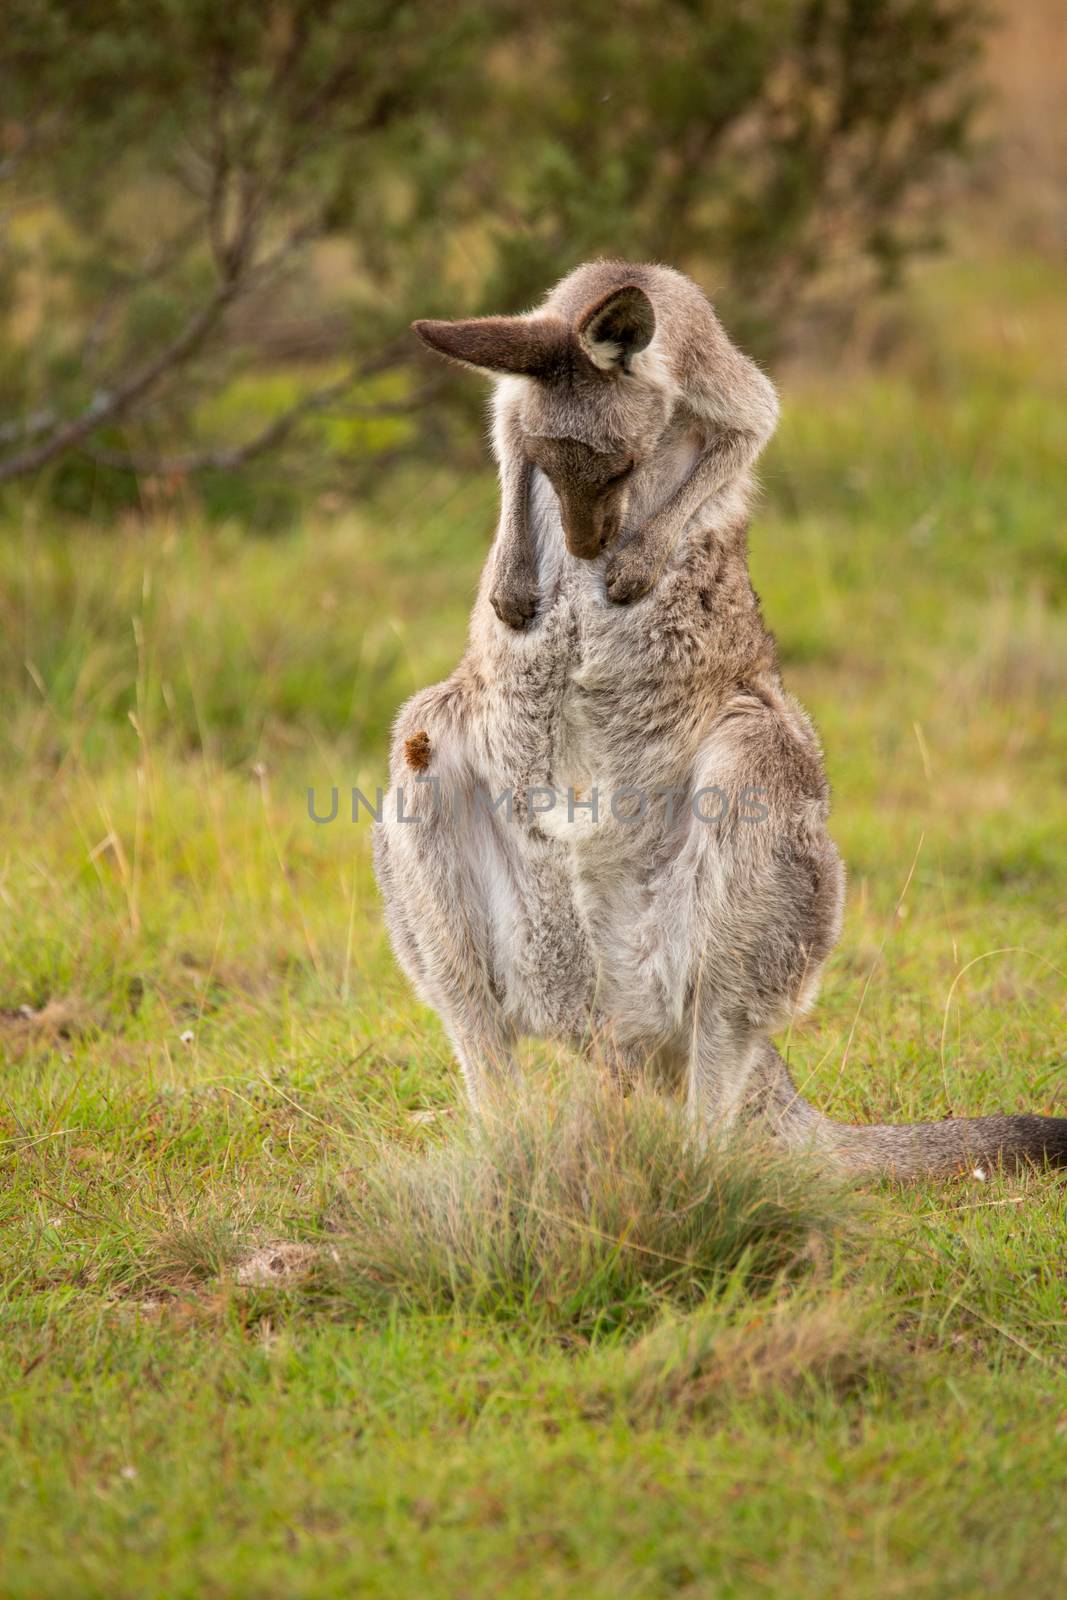 Kangaroo having a tummy scratch by lovleah